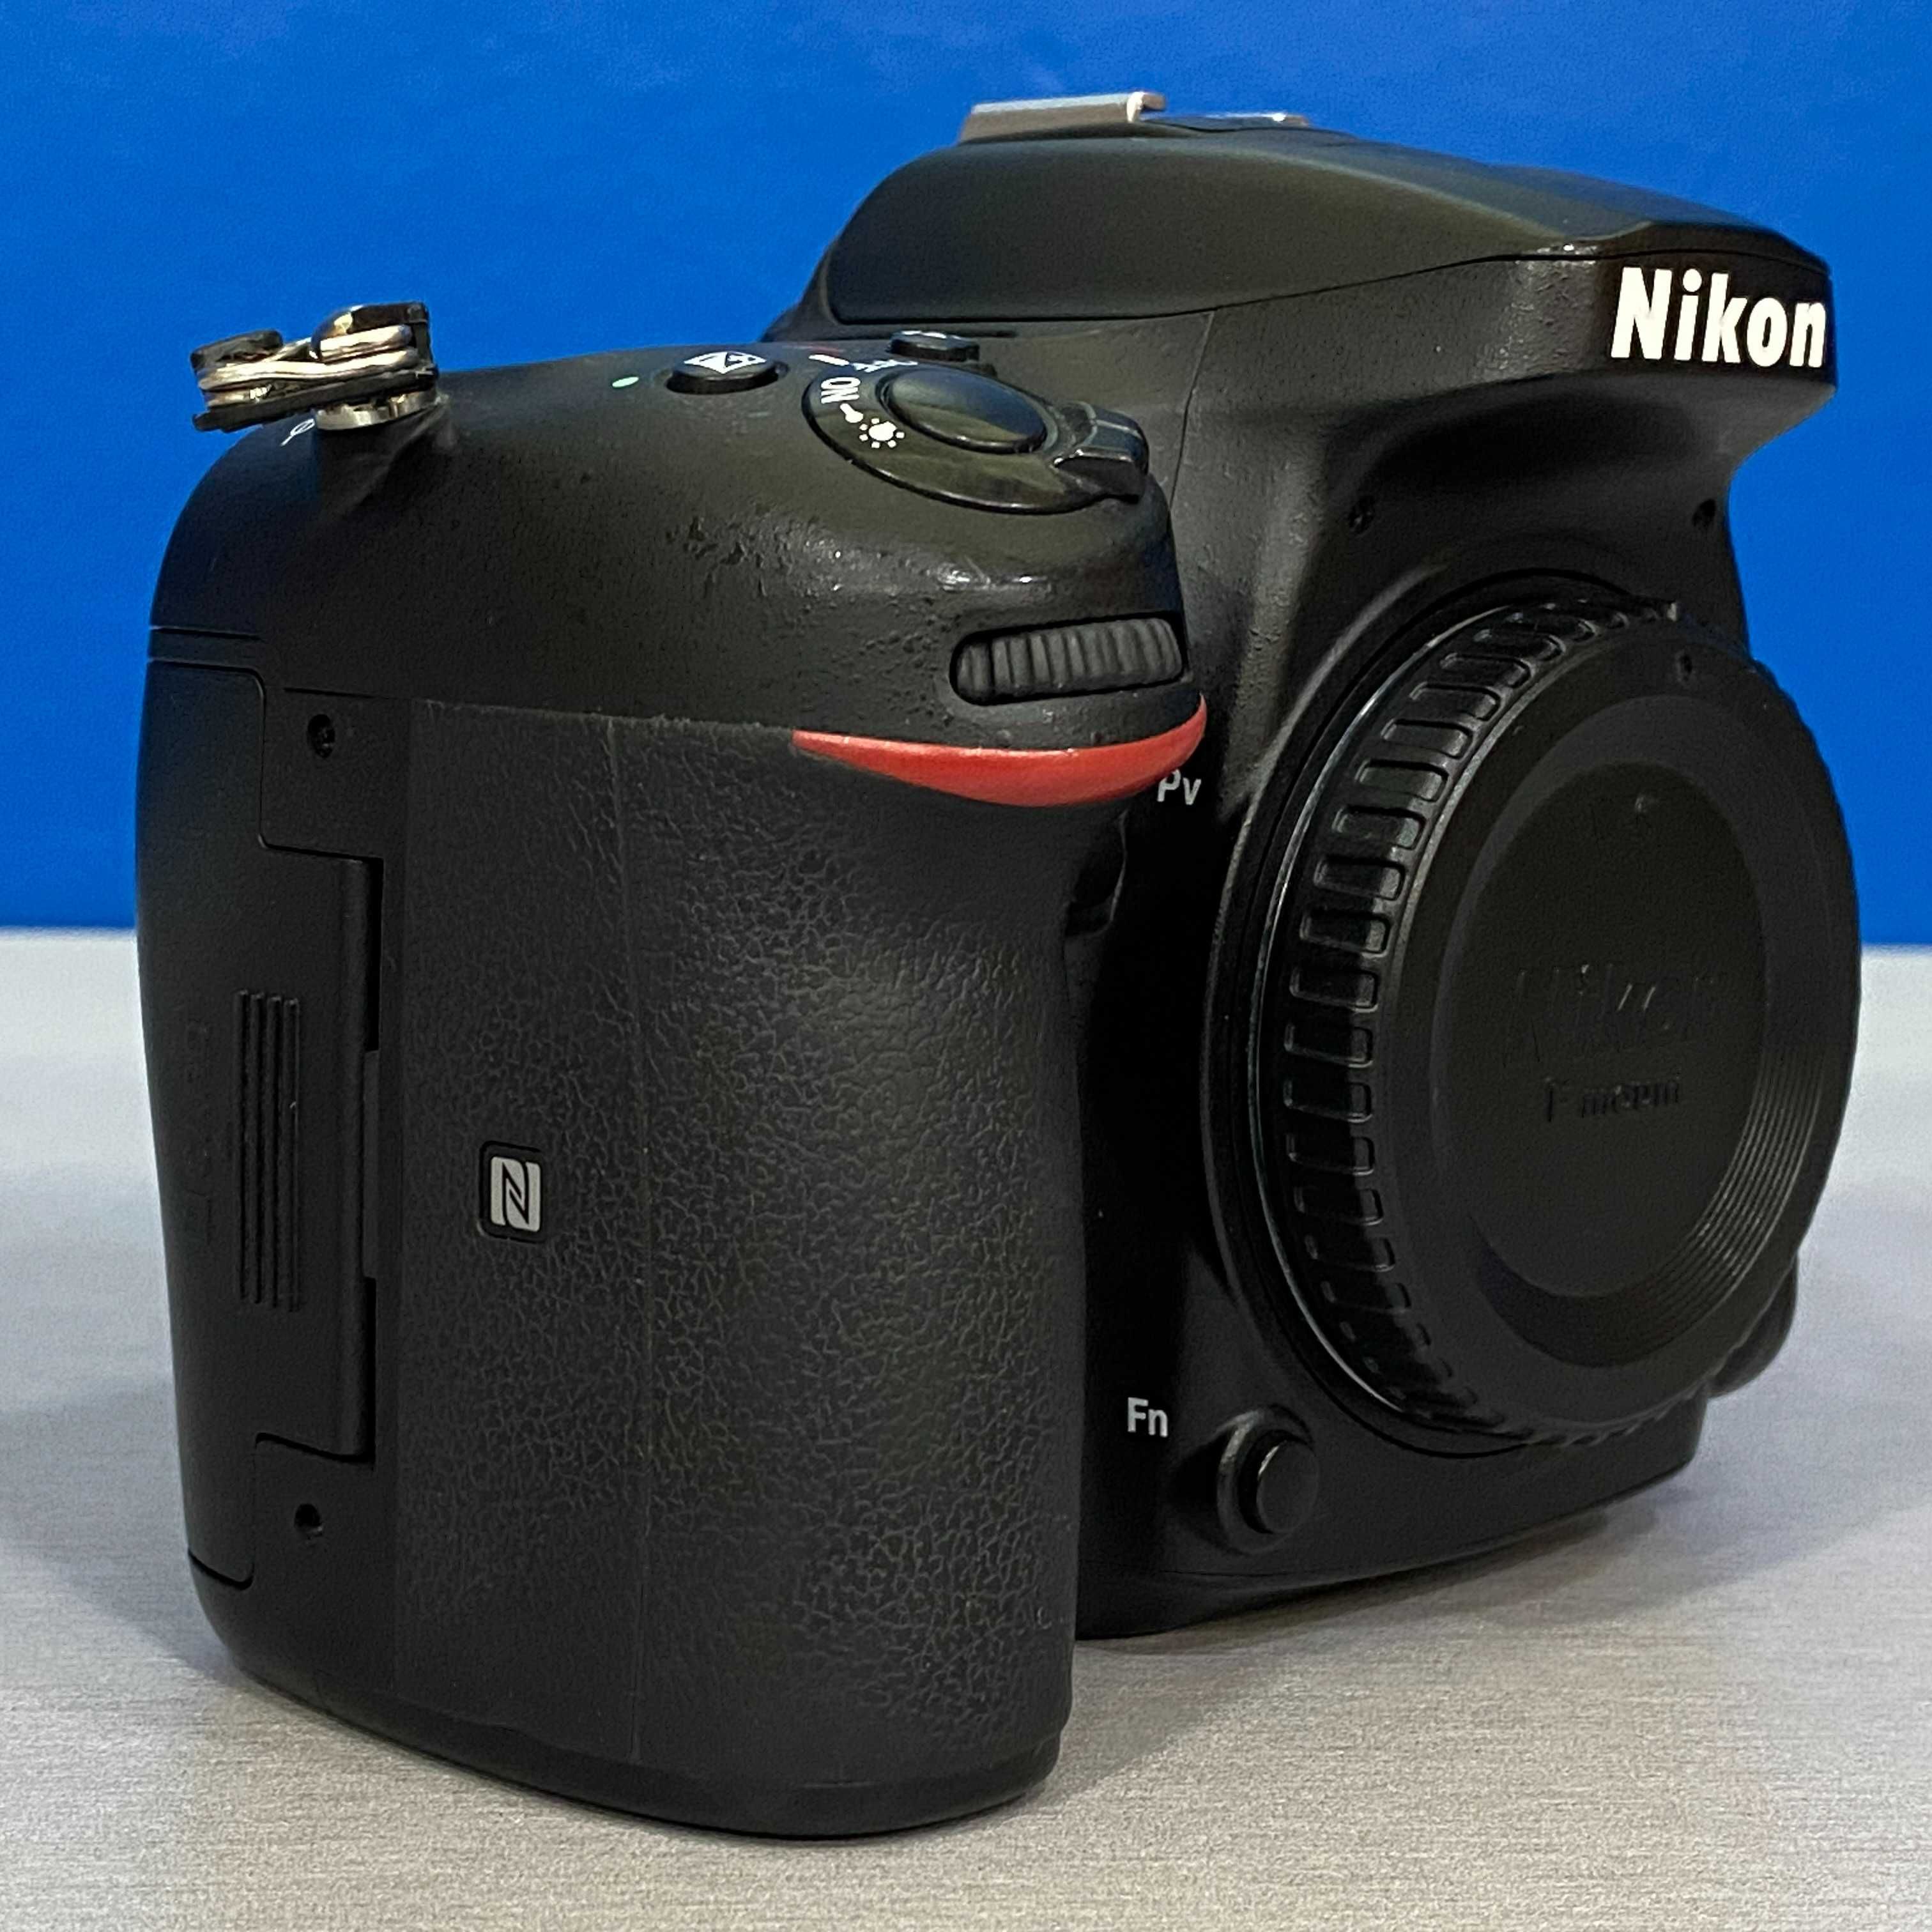 Nikon D7200 (Corpo) - 24.2MP